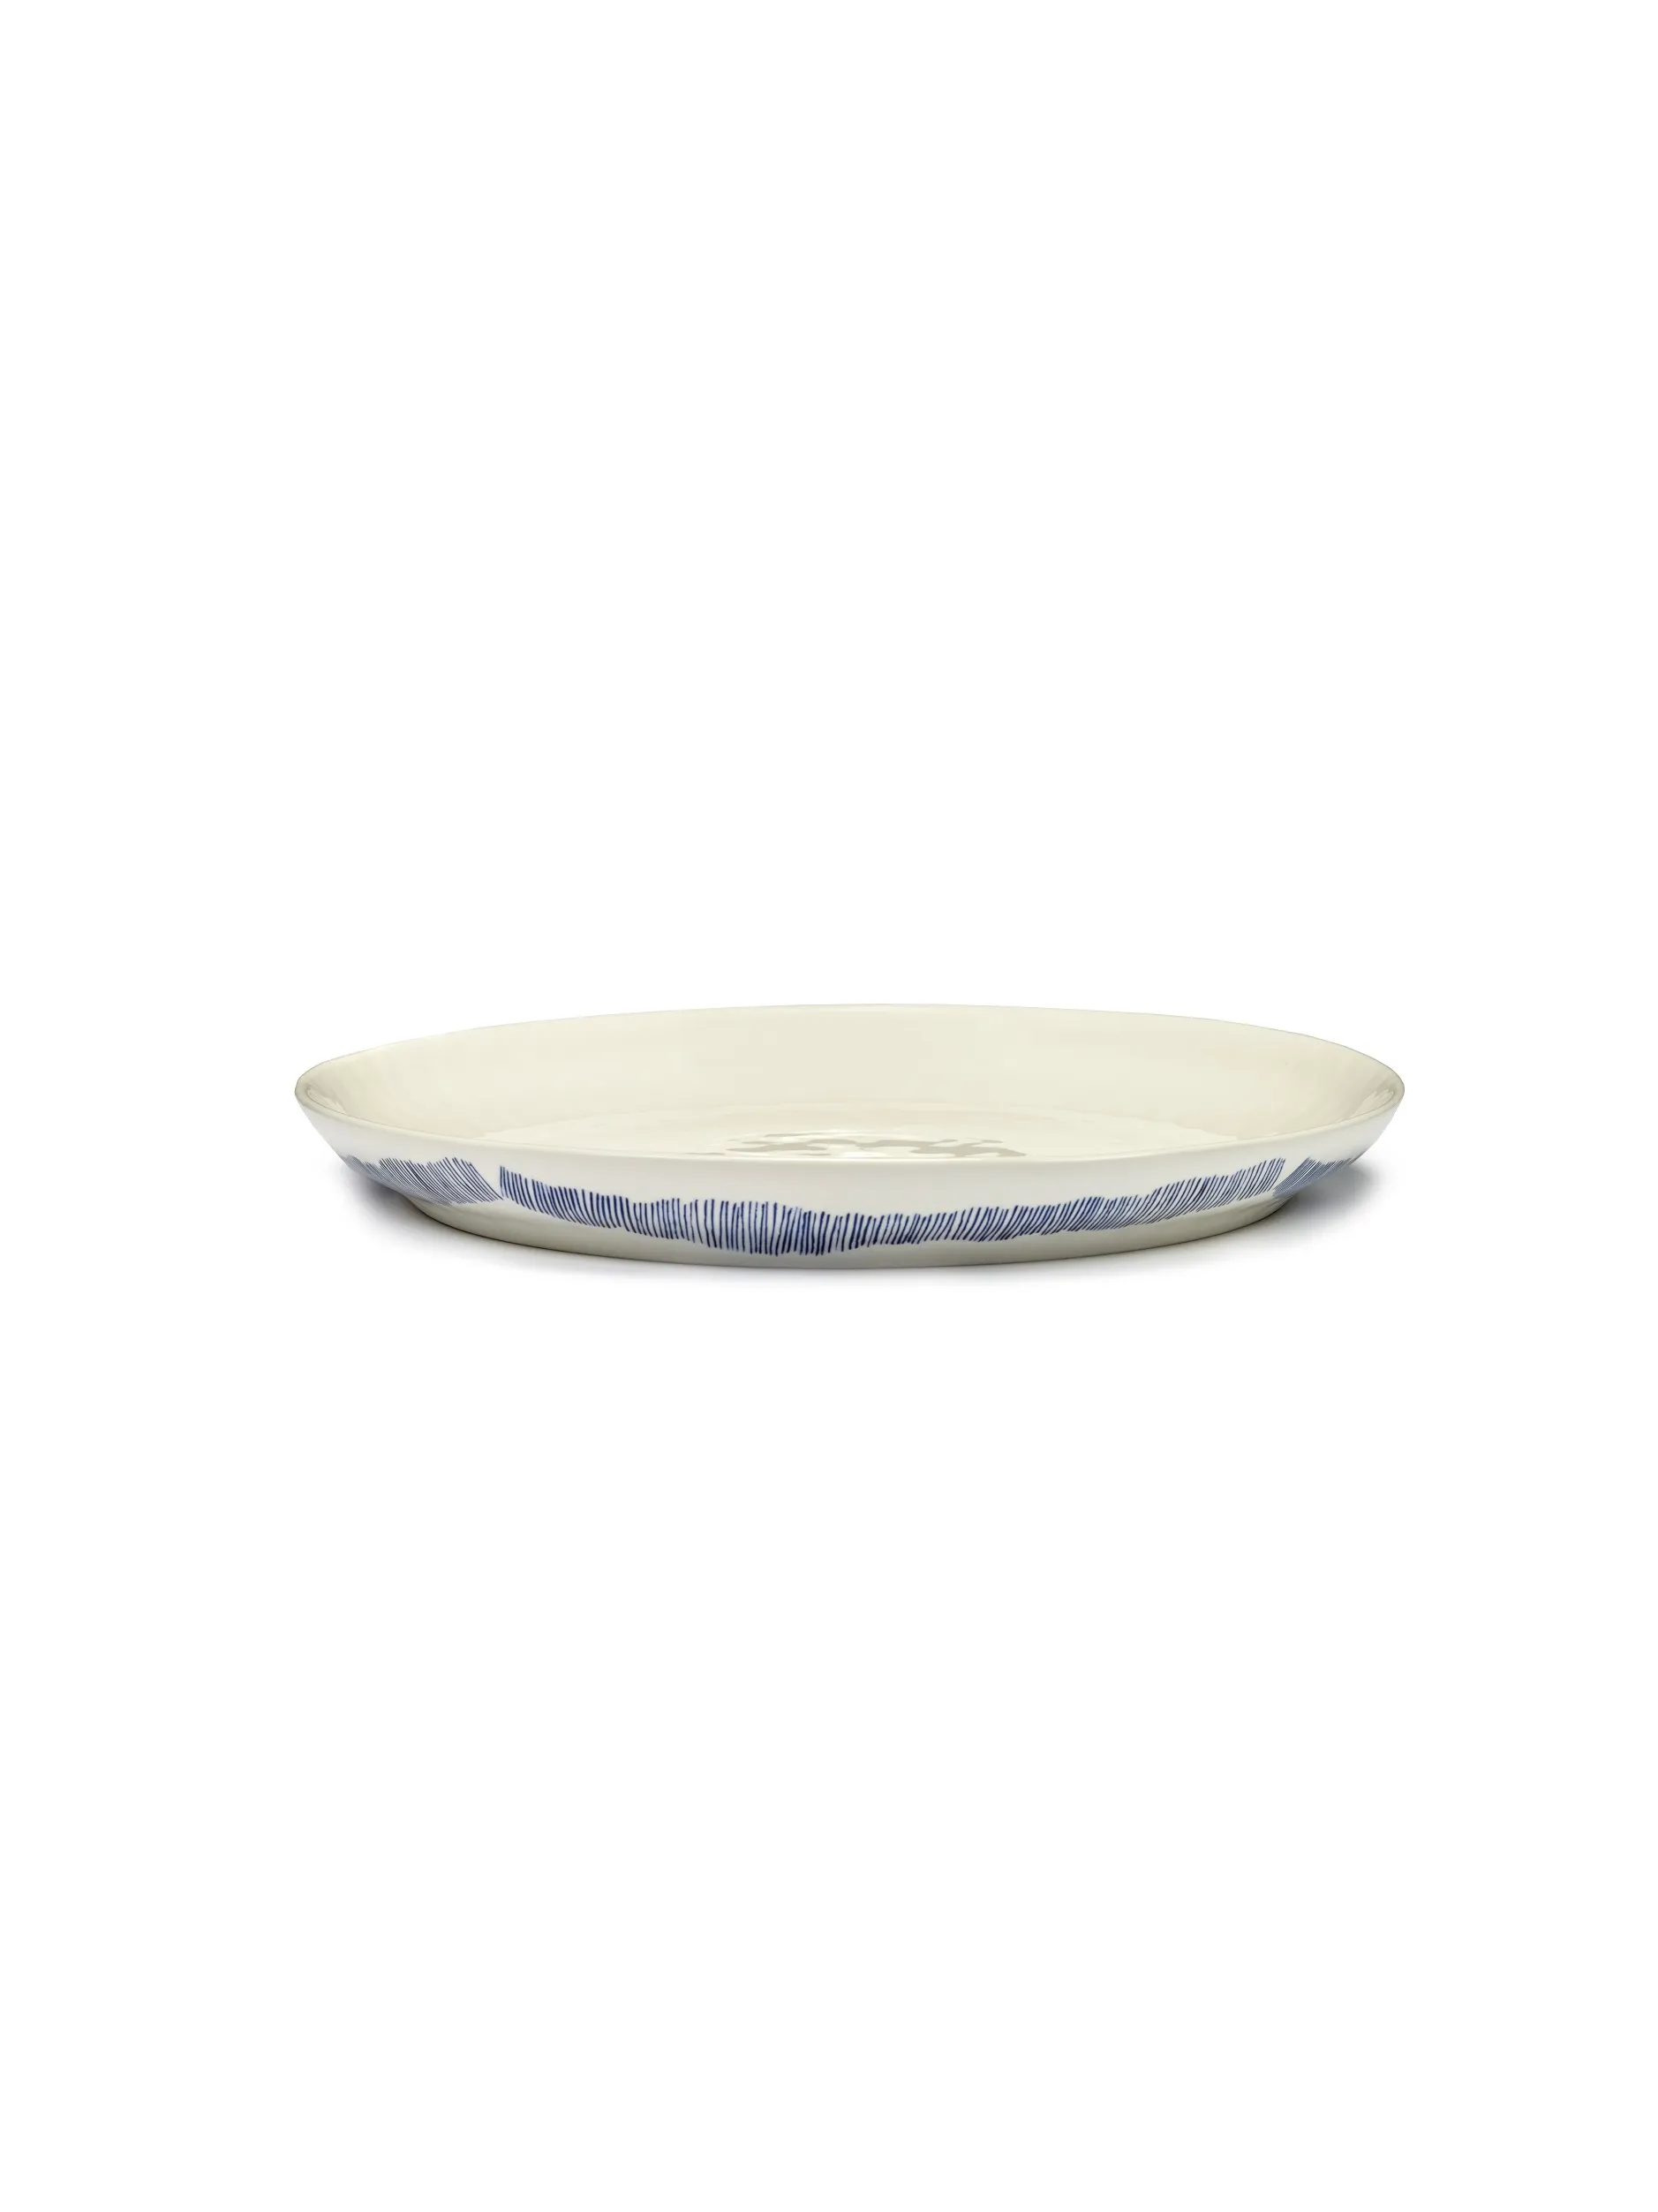 Serving Plate S White-Stripes Blue Feast Ottolenghi by Serax L 35 W 35 H 4 CM